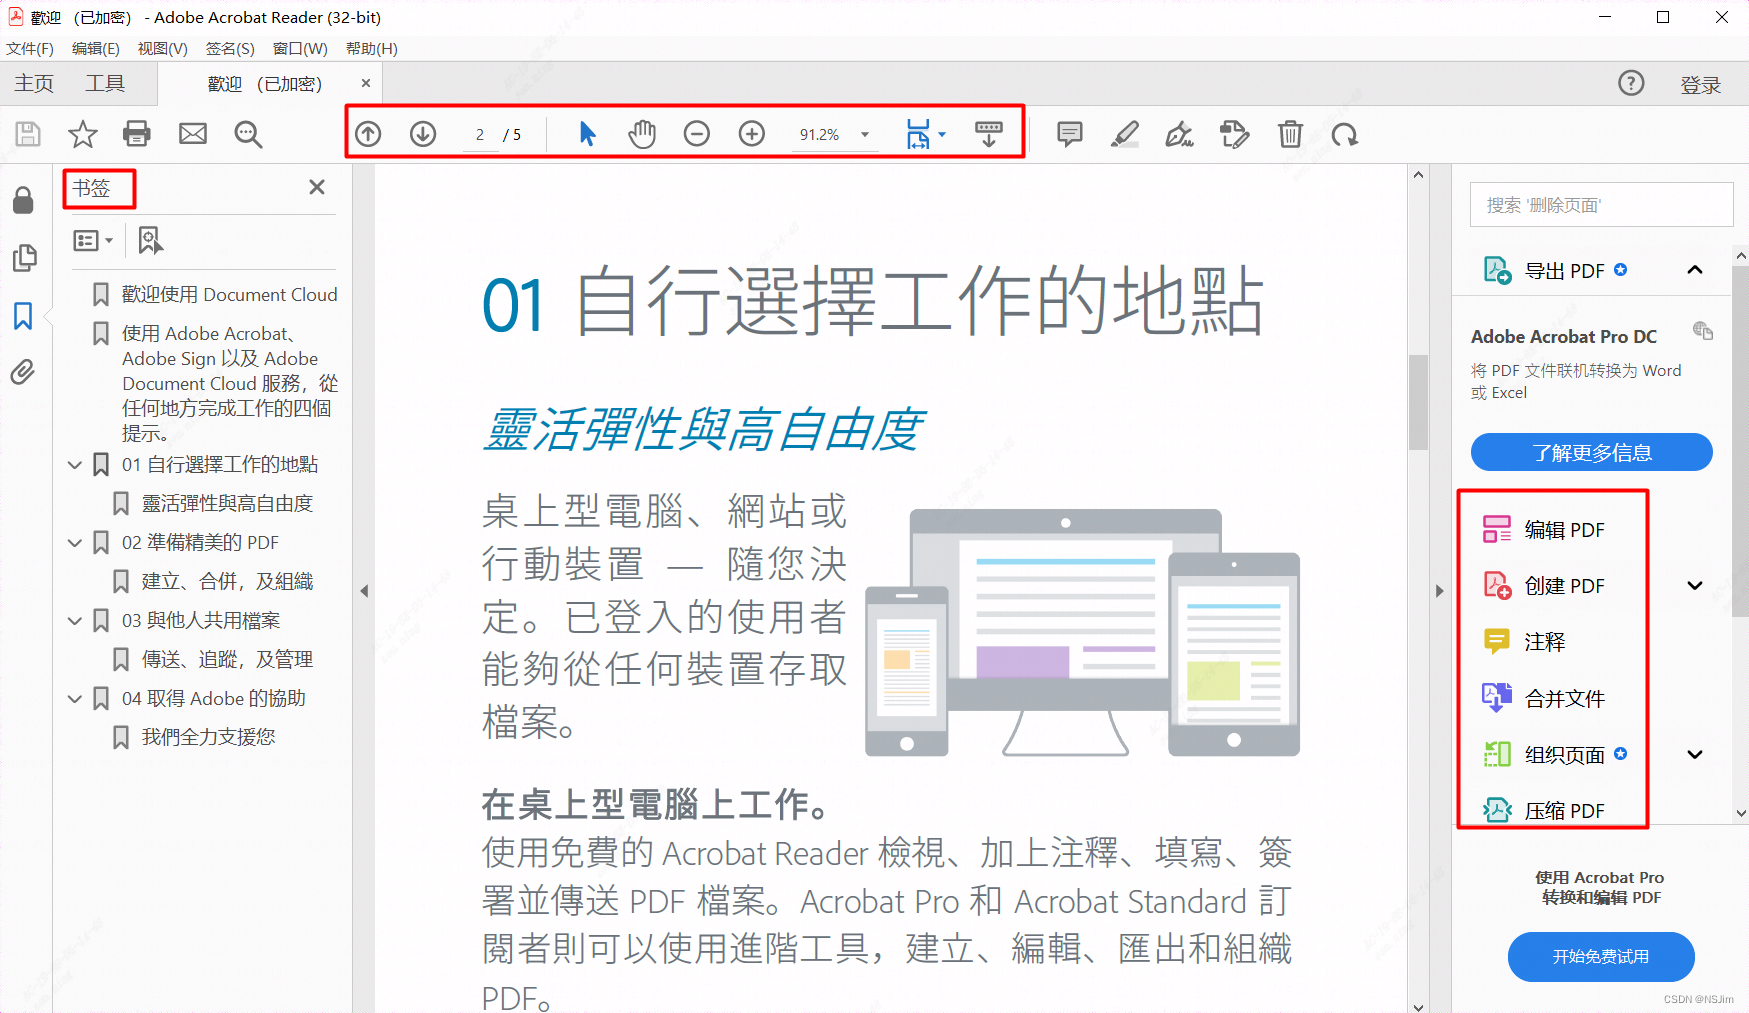  Adobe Acrobat Reader界面改版 - 解决方案